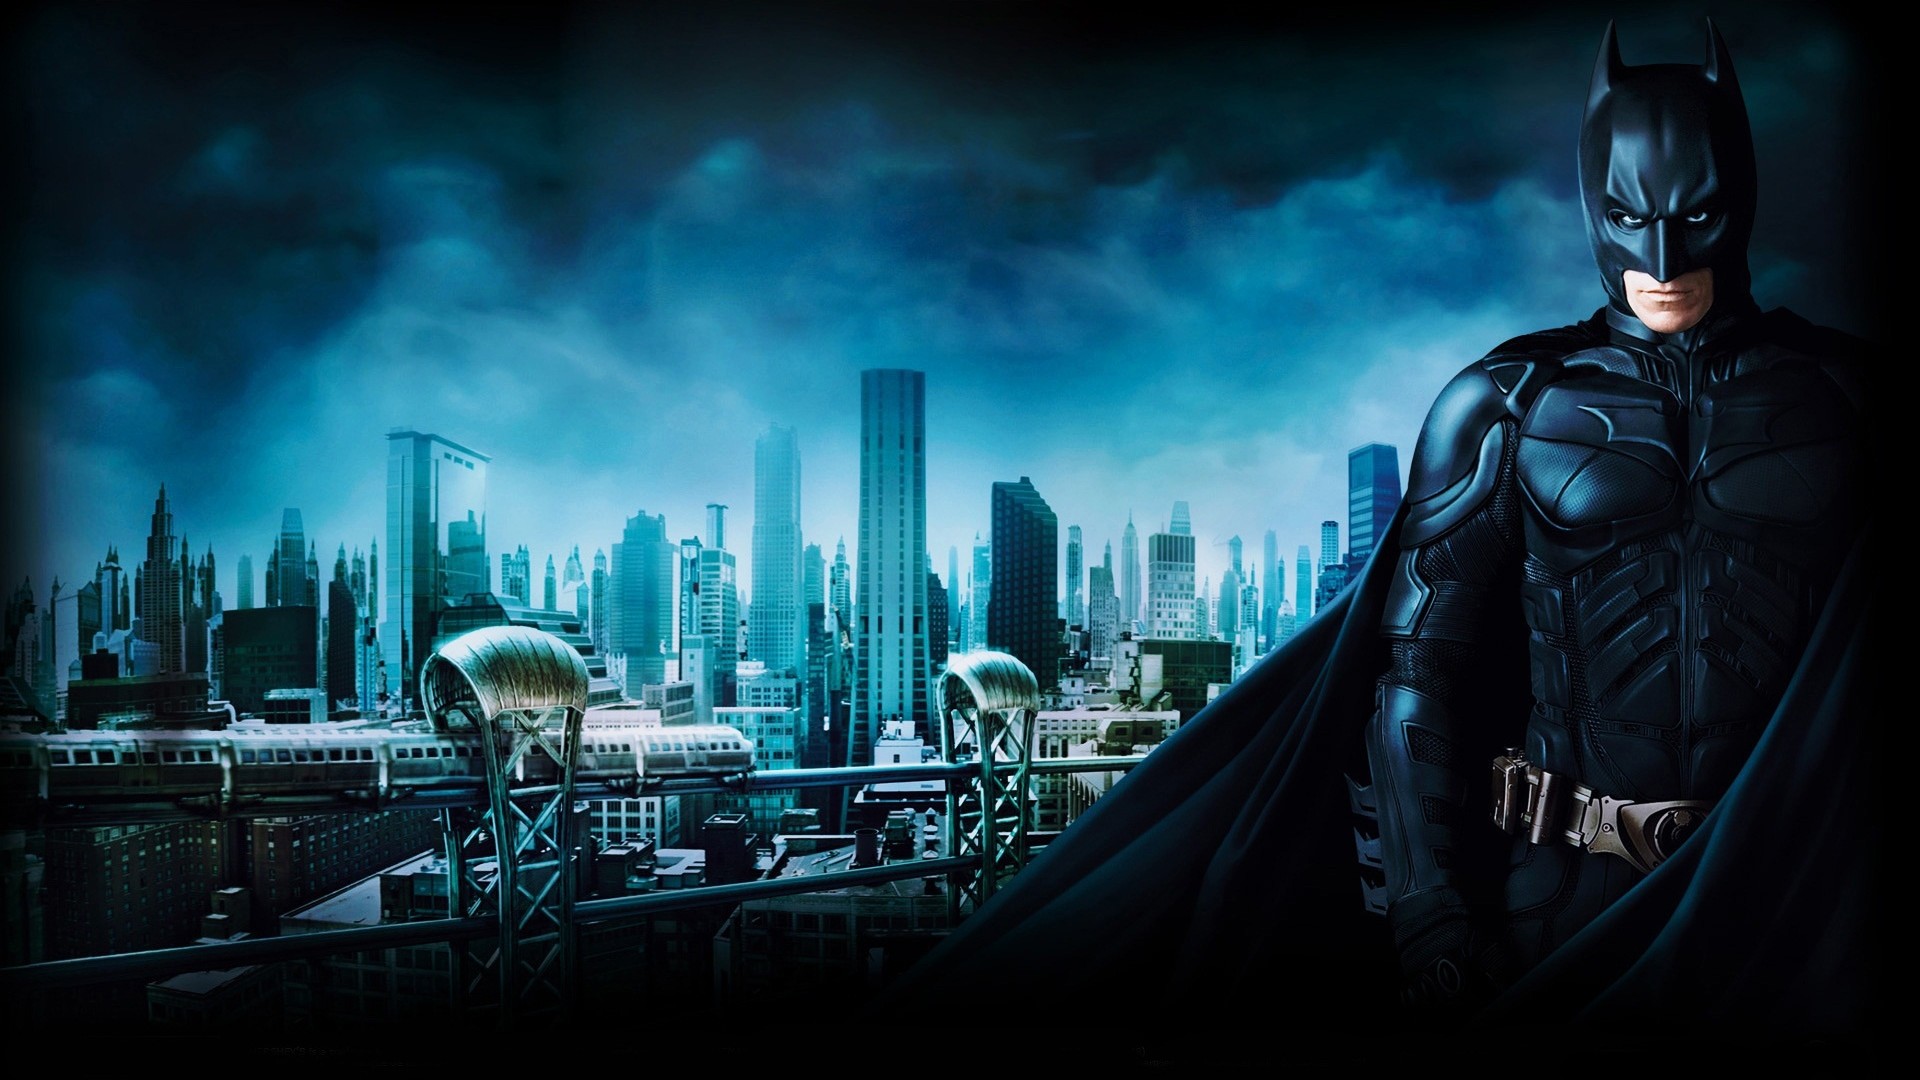  Batman Begins Gotham Train images hd Wallpaper and make this wallpaper